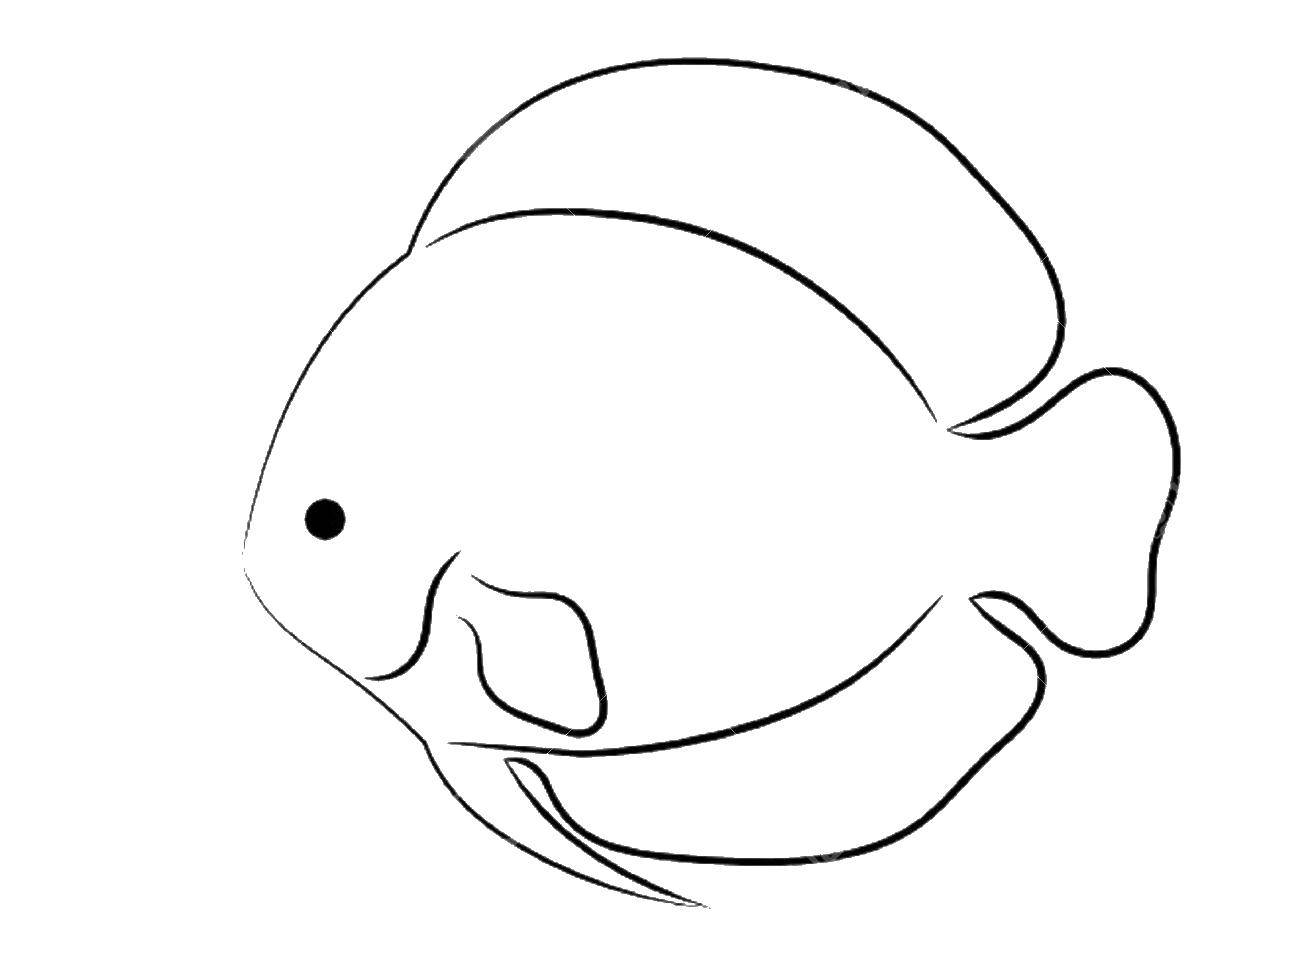 Название: Раскраска Рыбка  камбала. Категория: Контуры рыб. Теги: камбала.